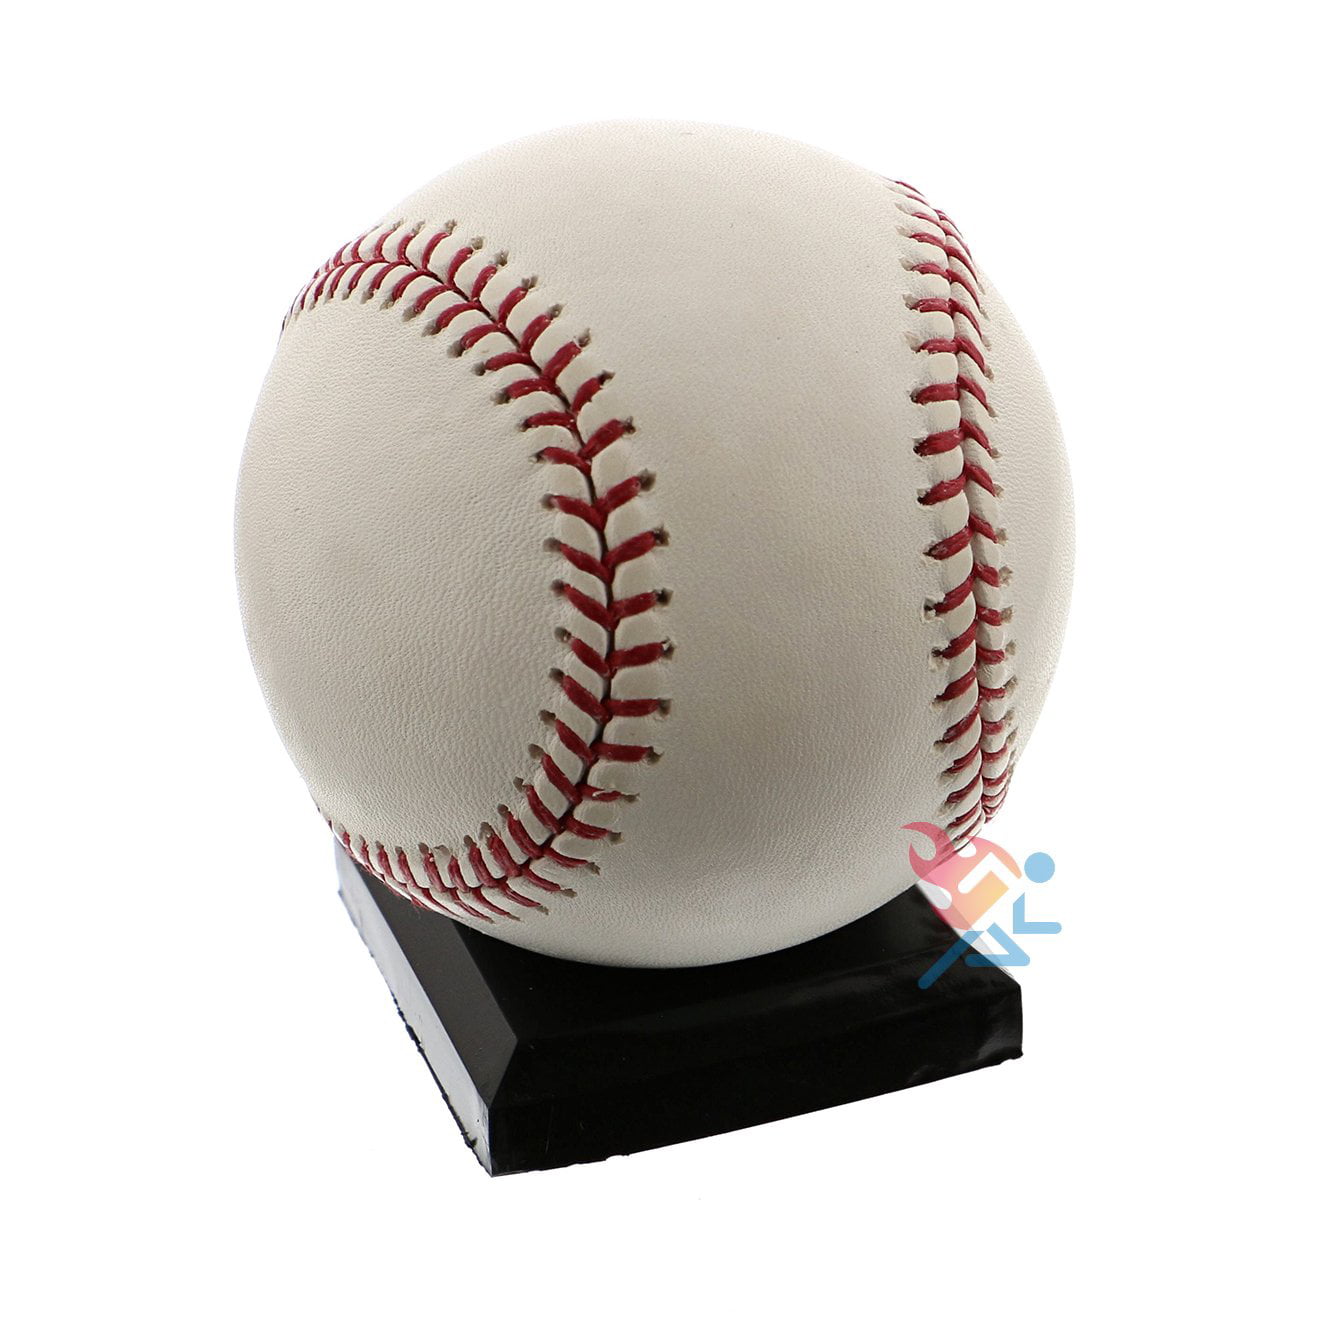 Tennis Balls *1 Large 2" Round Dimple Display Stand For Baseballs Softballs 